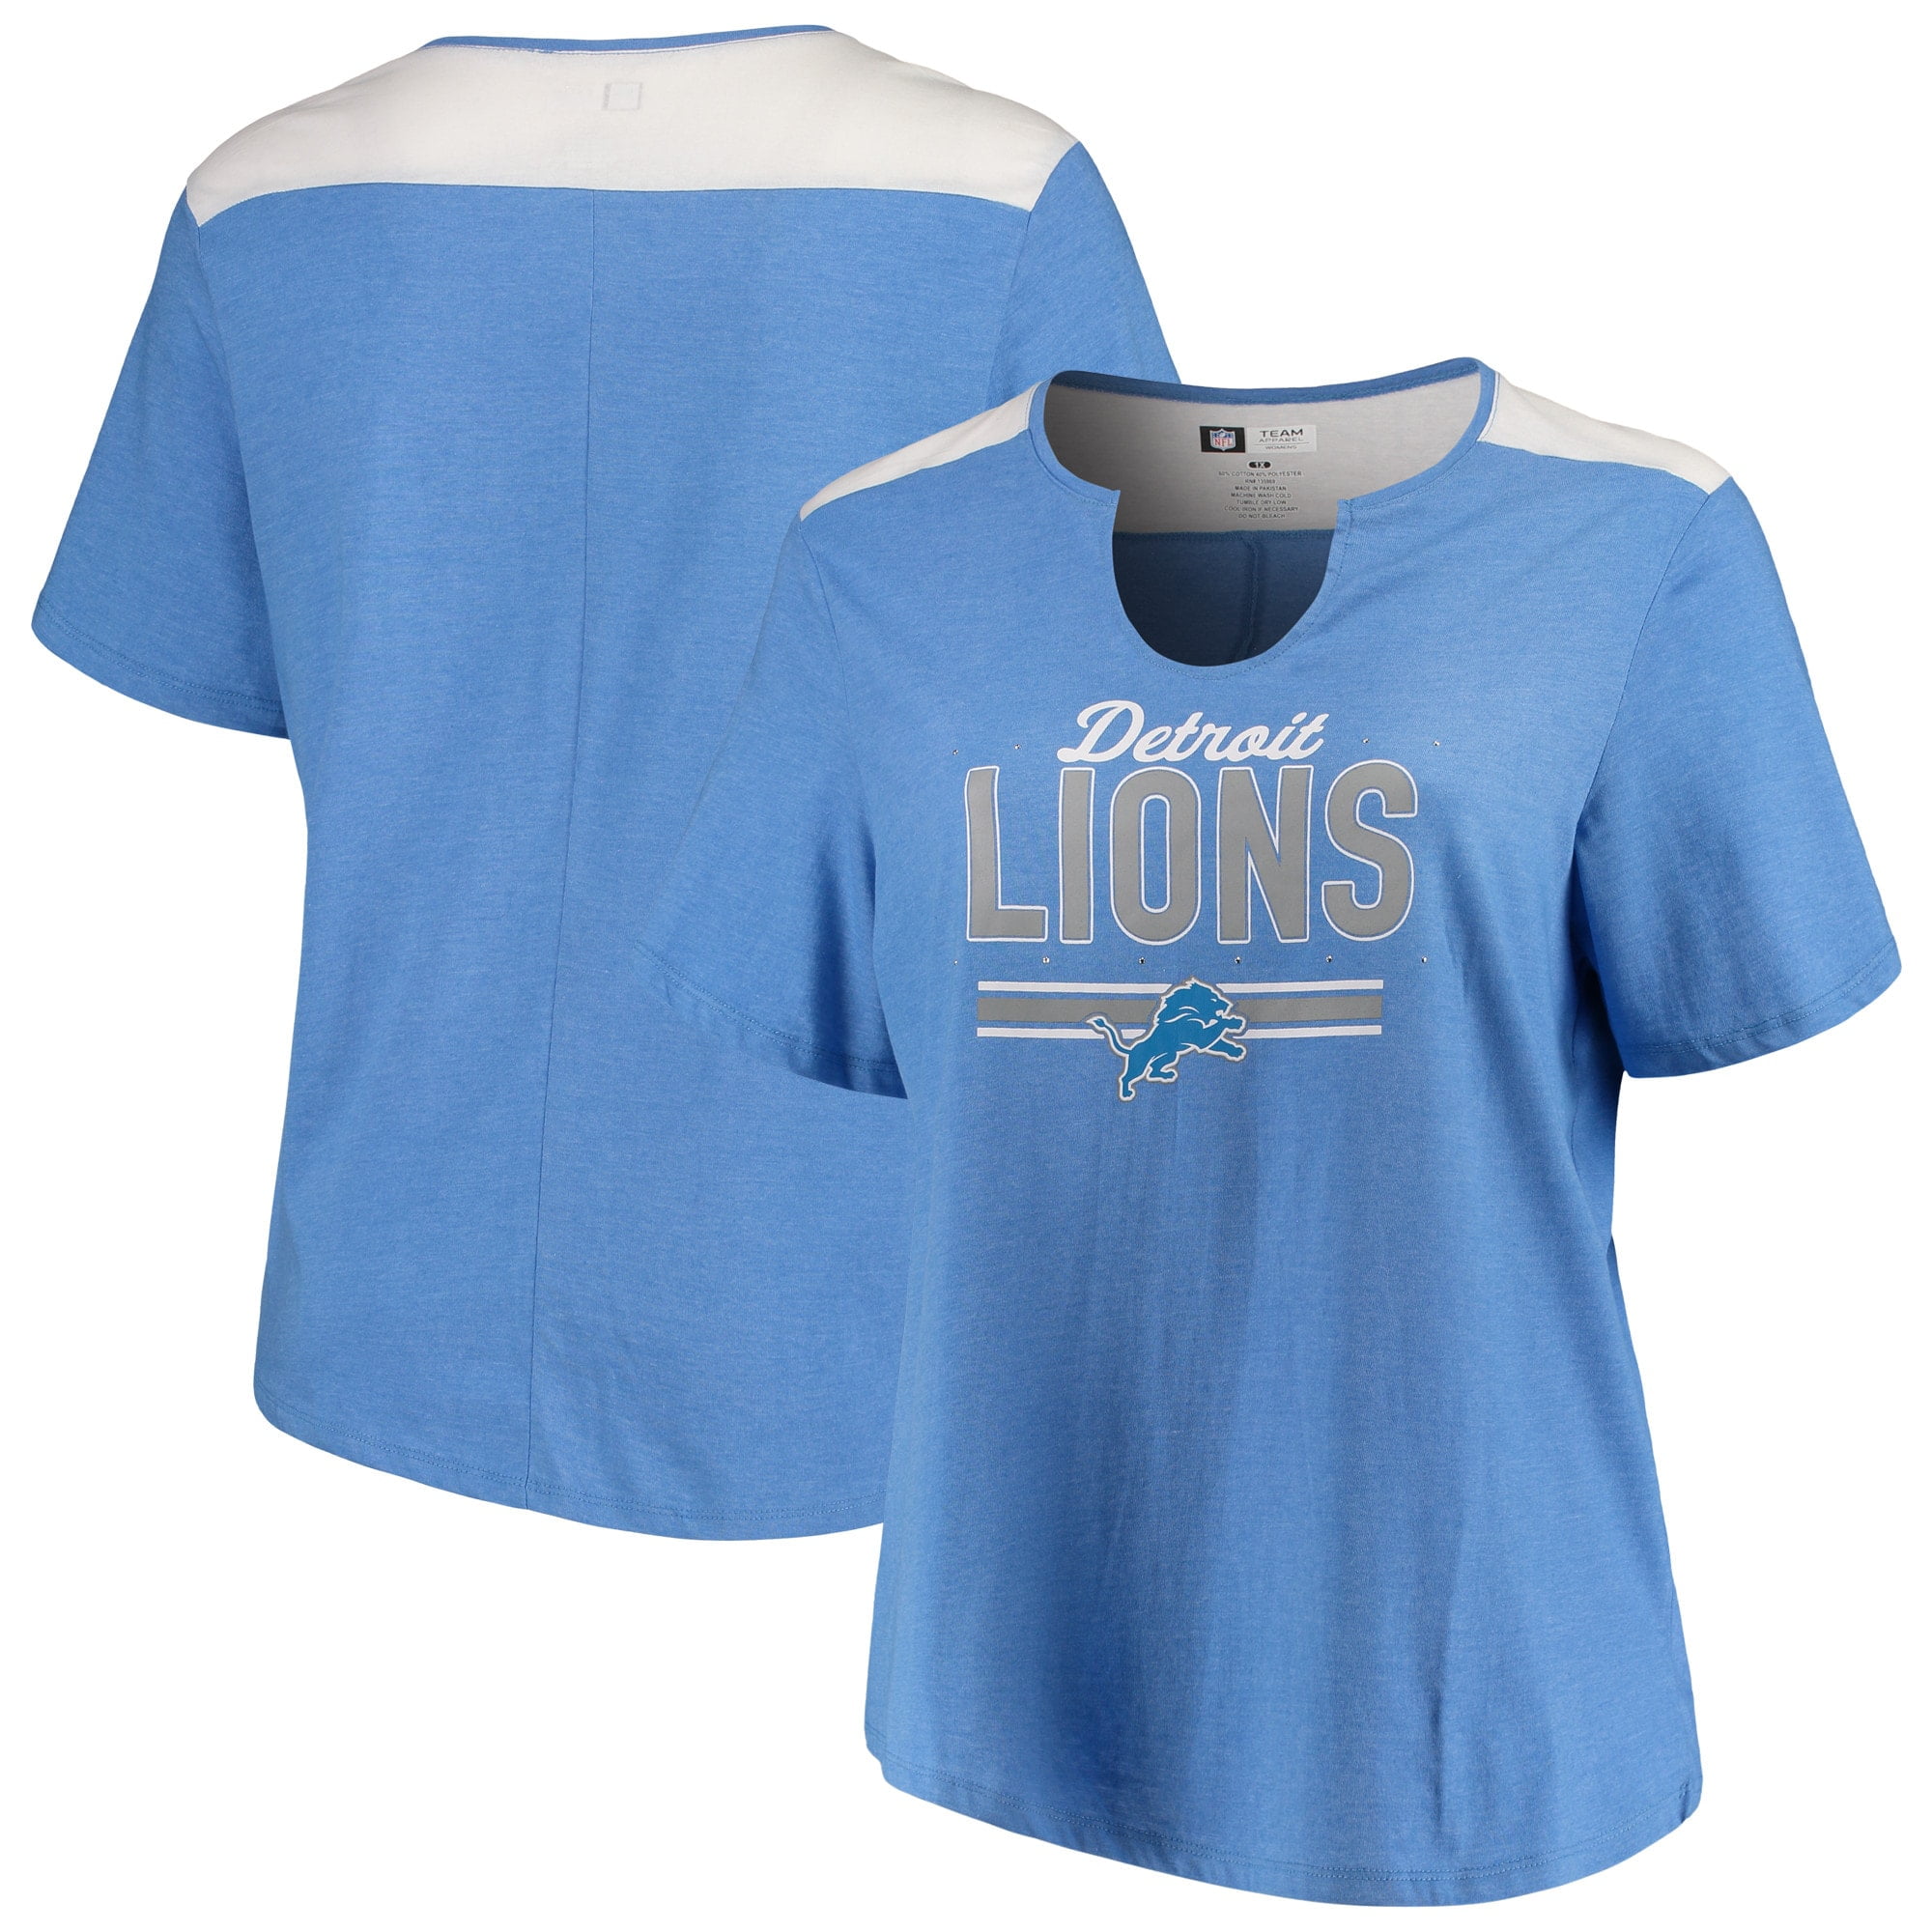 detroit lions shirts walmart